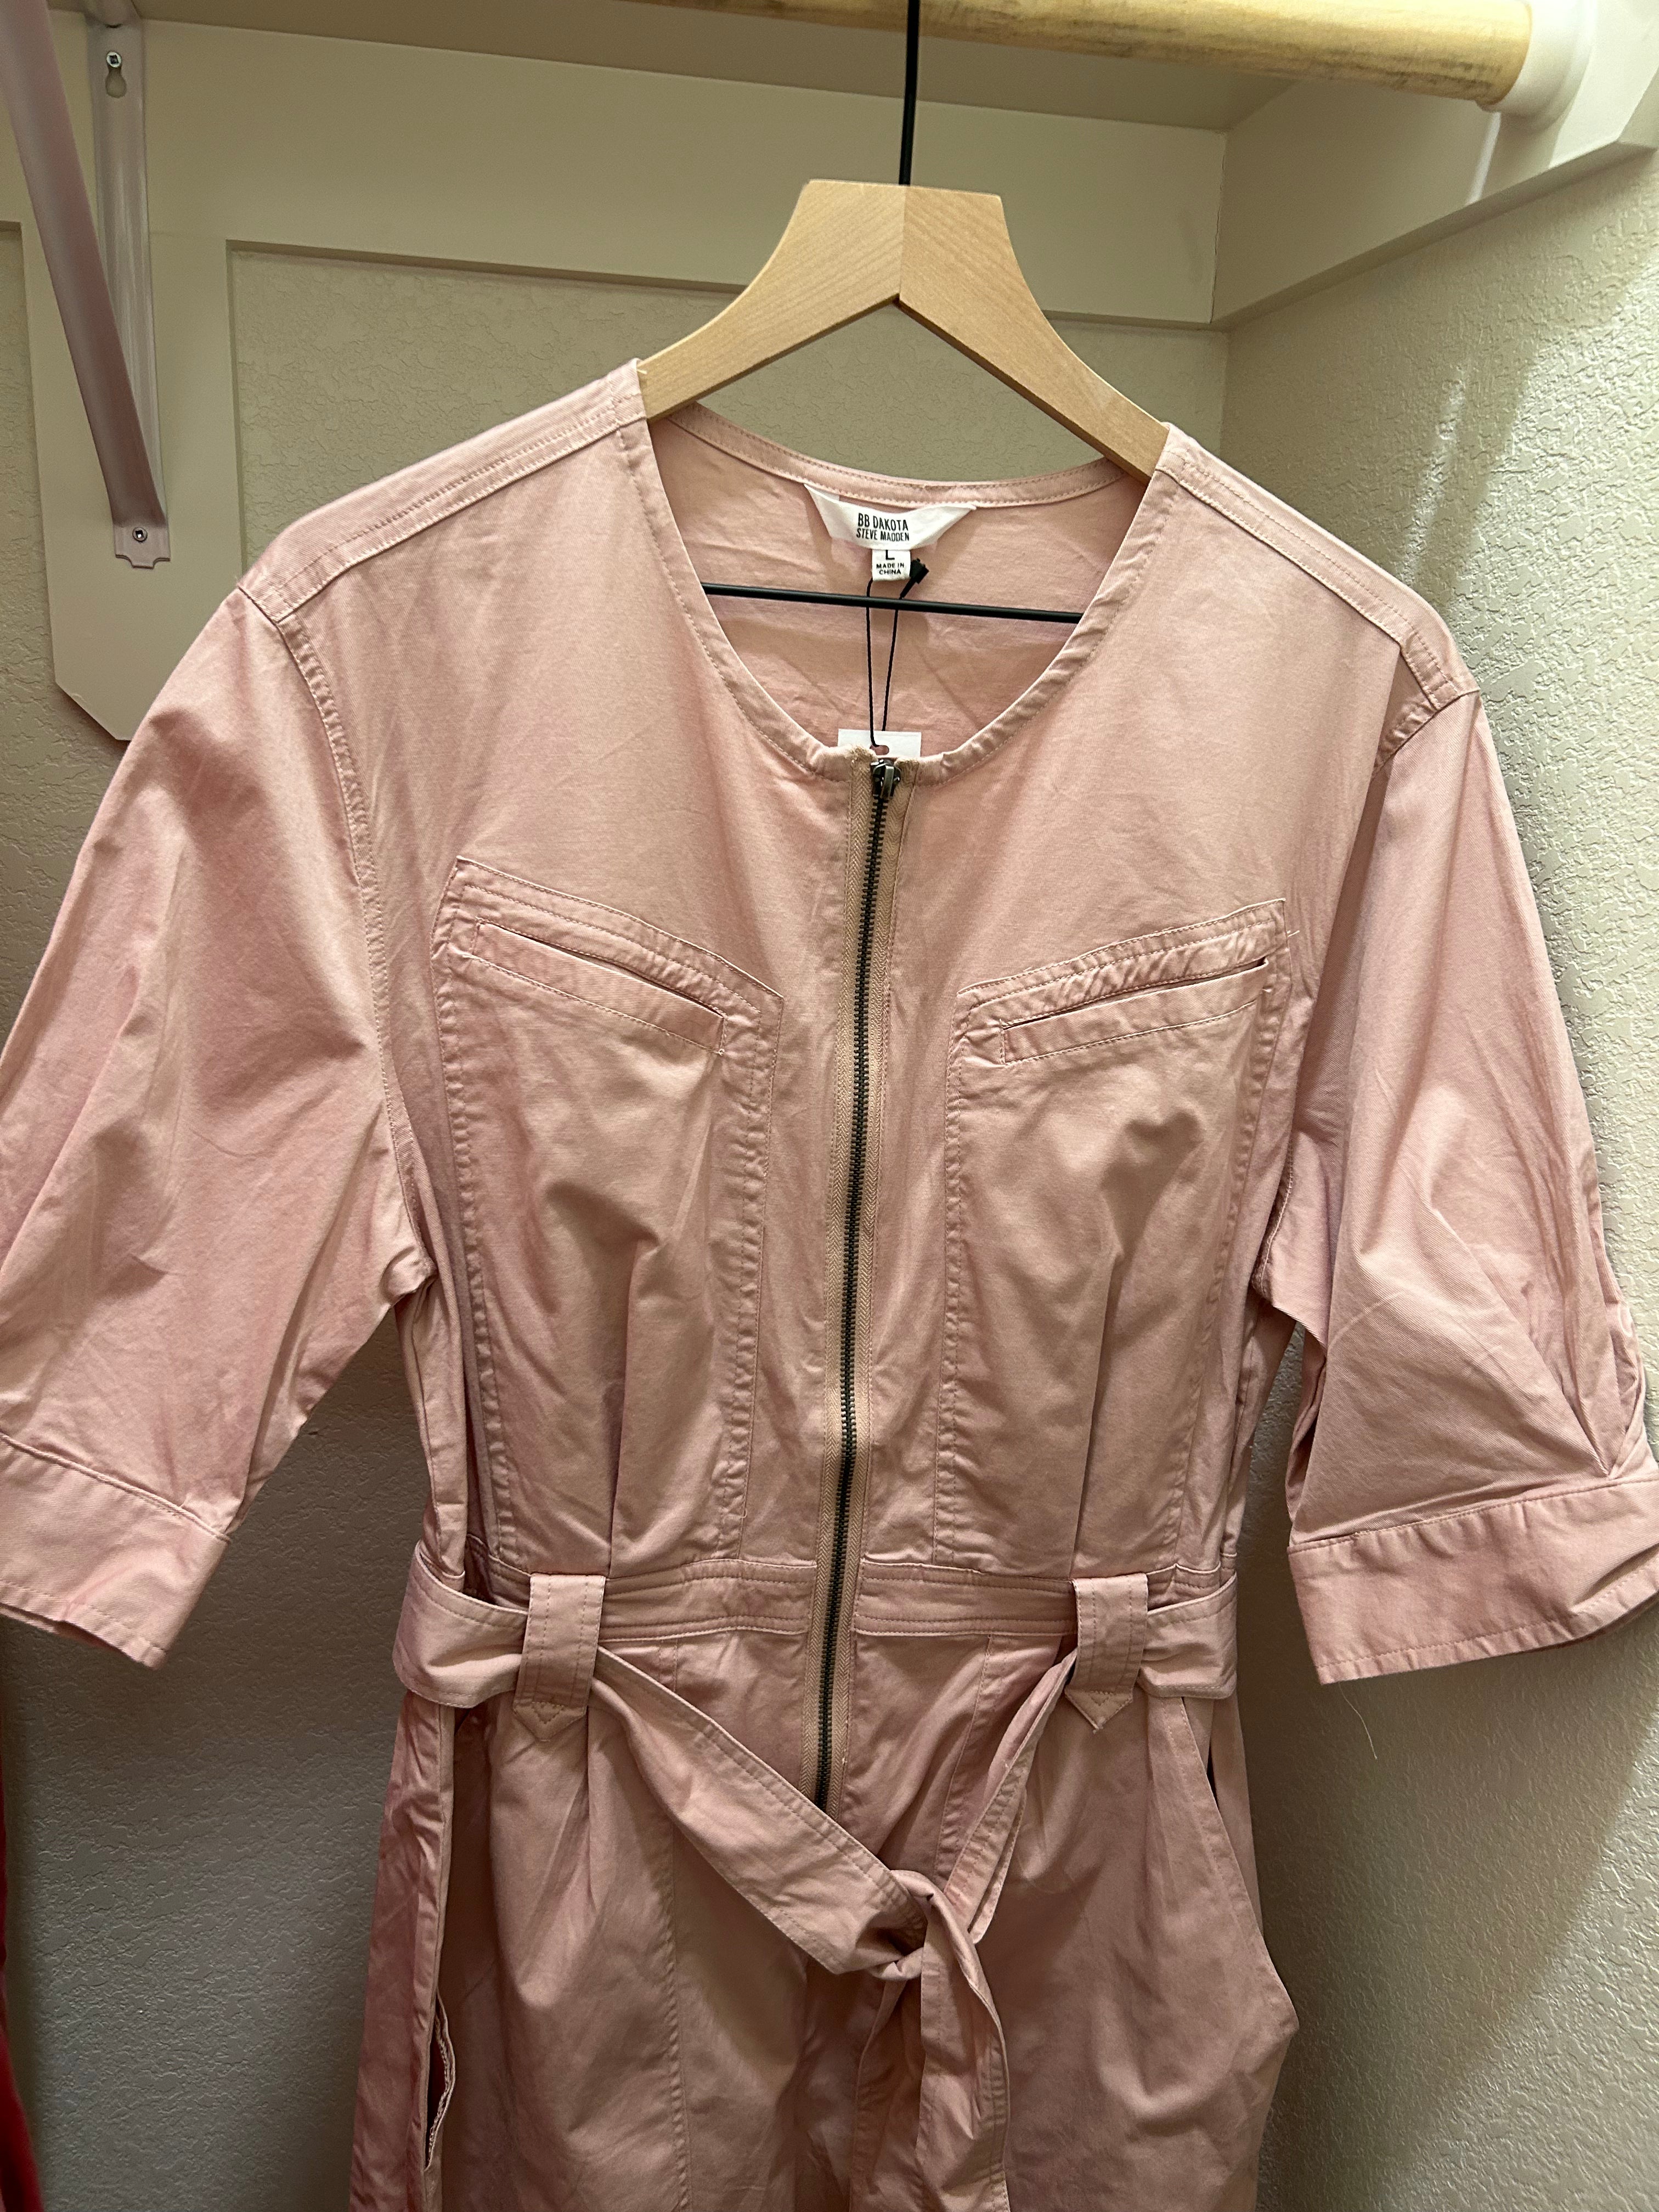 bb dakota / steve madden flying private jumpsuit in pale pink